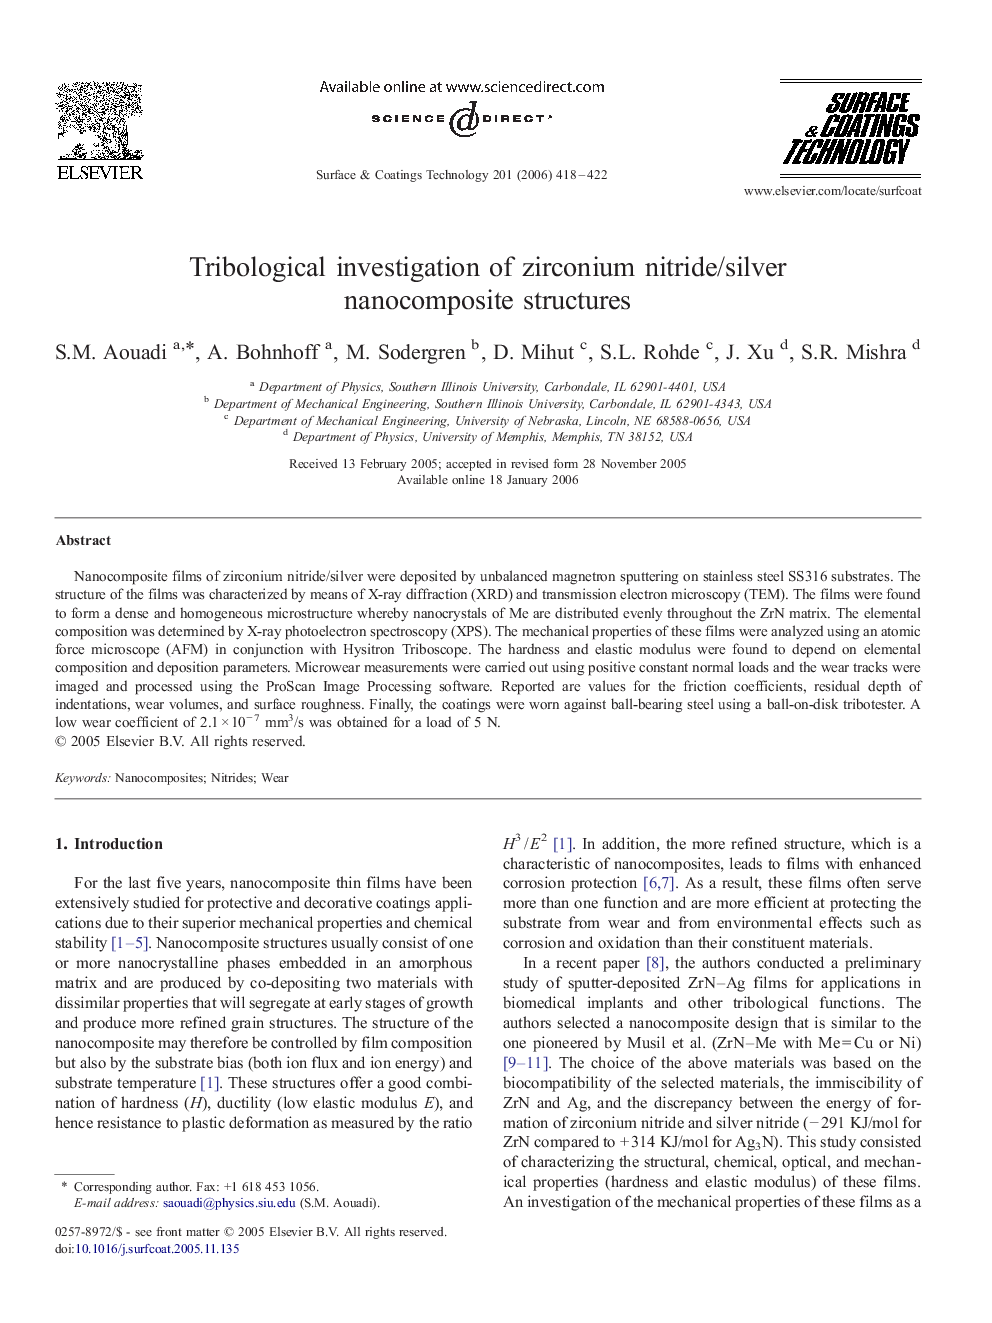 Tribological investigation of zirconium nitride/silver nanocomposite structures